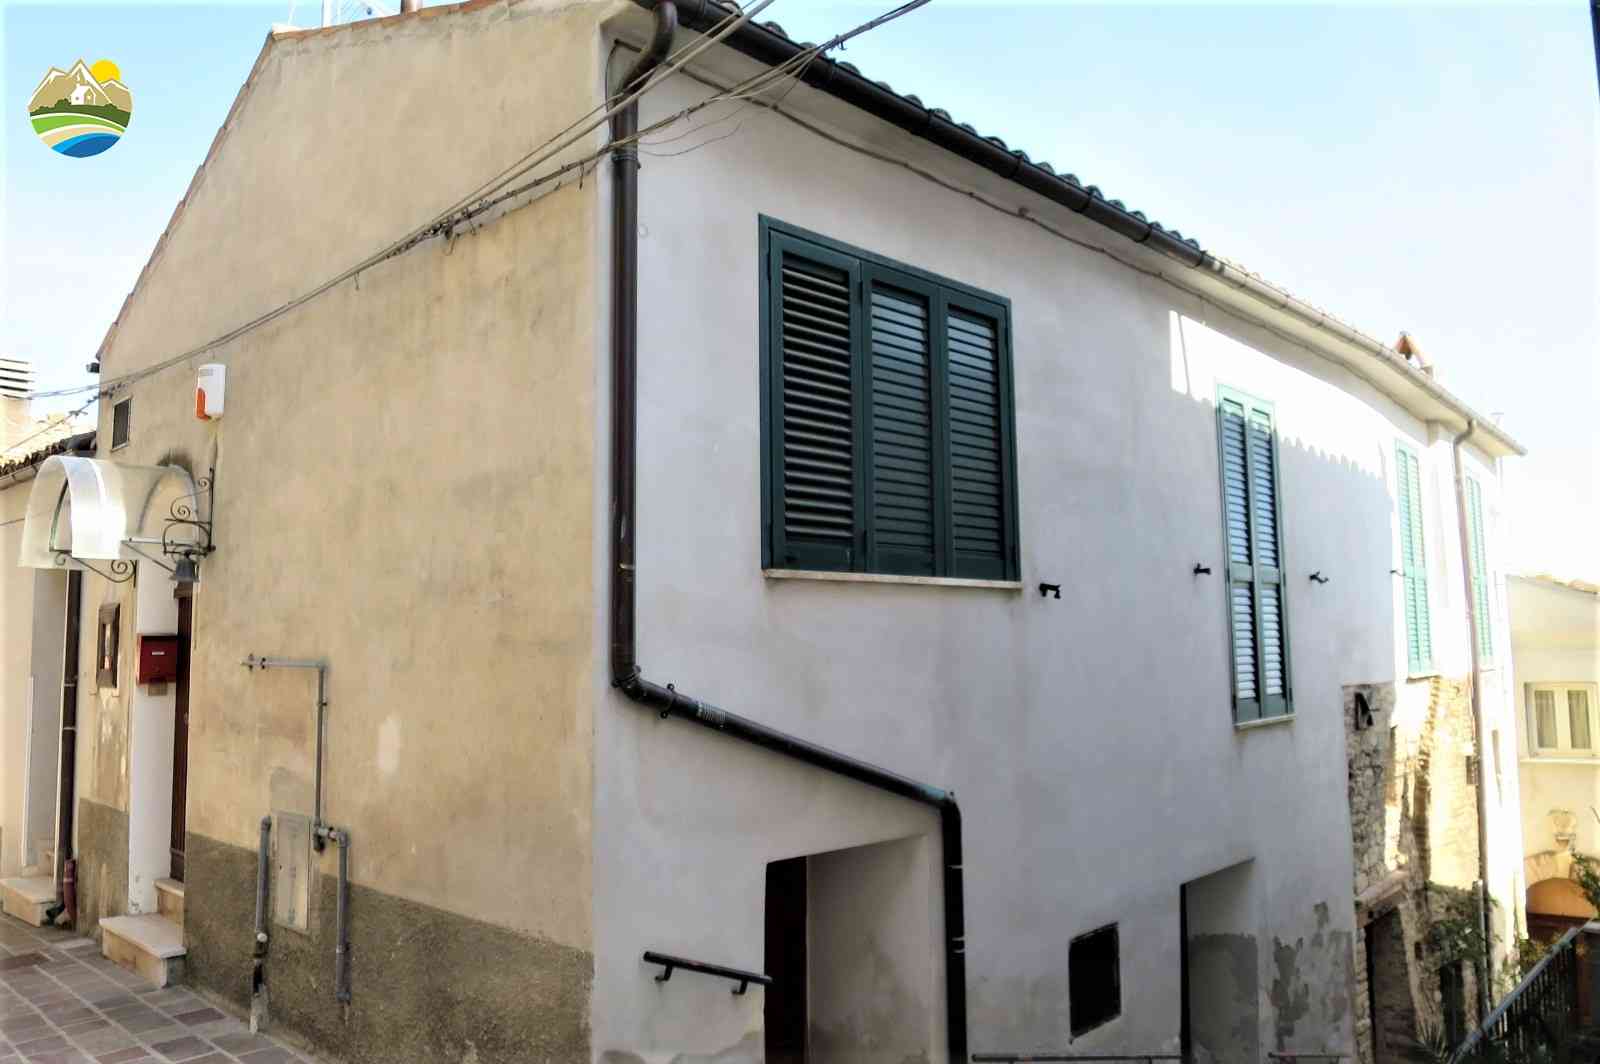 Townhouse Townhouse for sale Montefino (TE), Casa del Borgo - Montefino - EUR 80.438 10 small